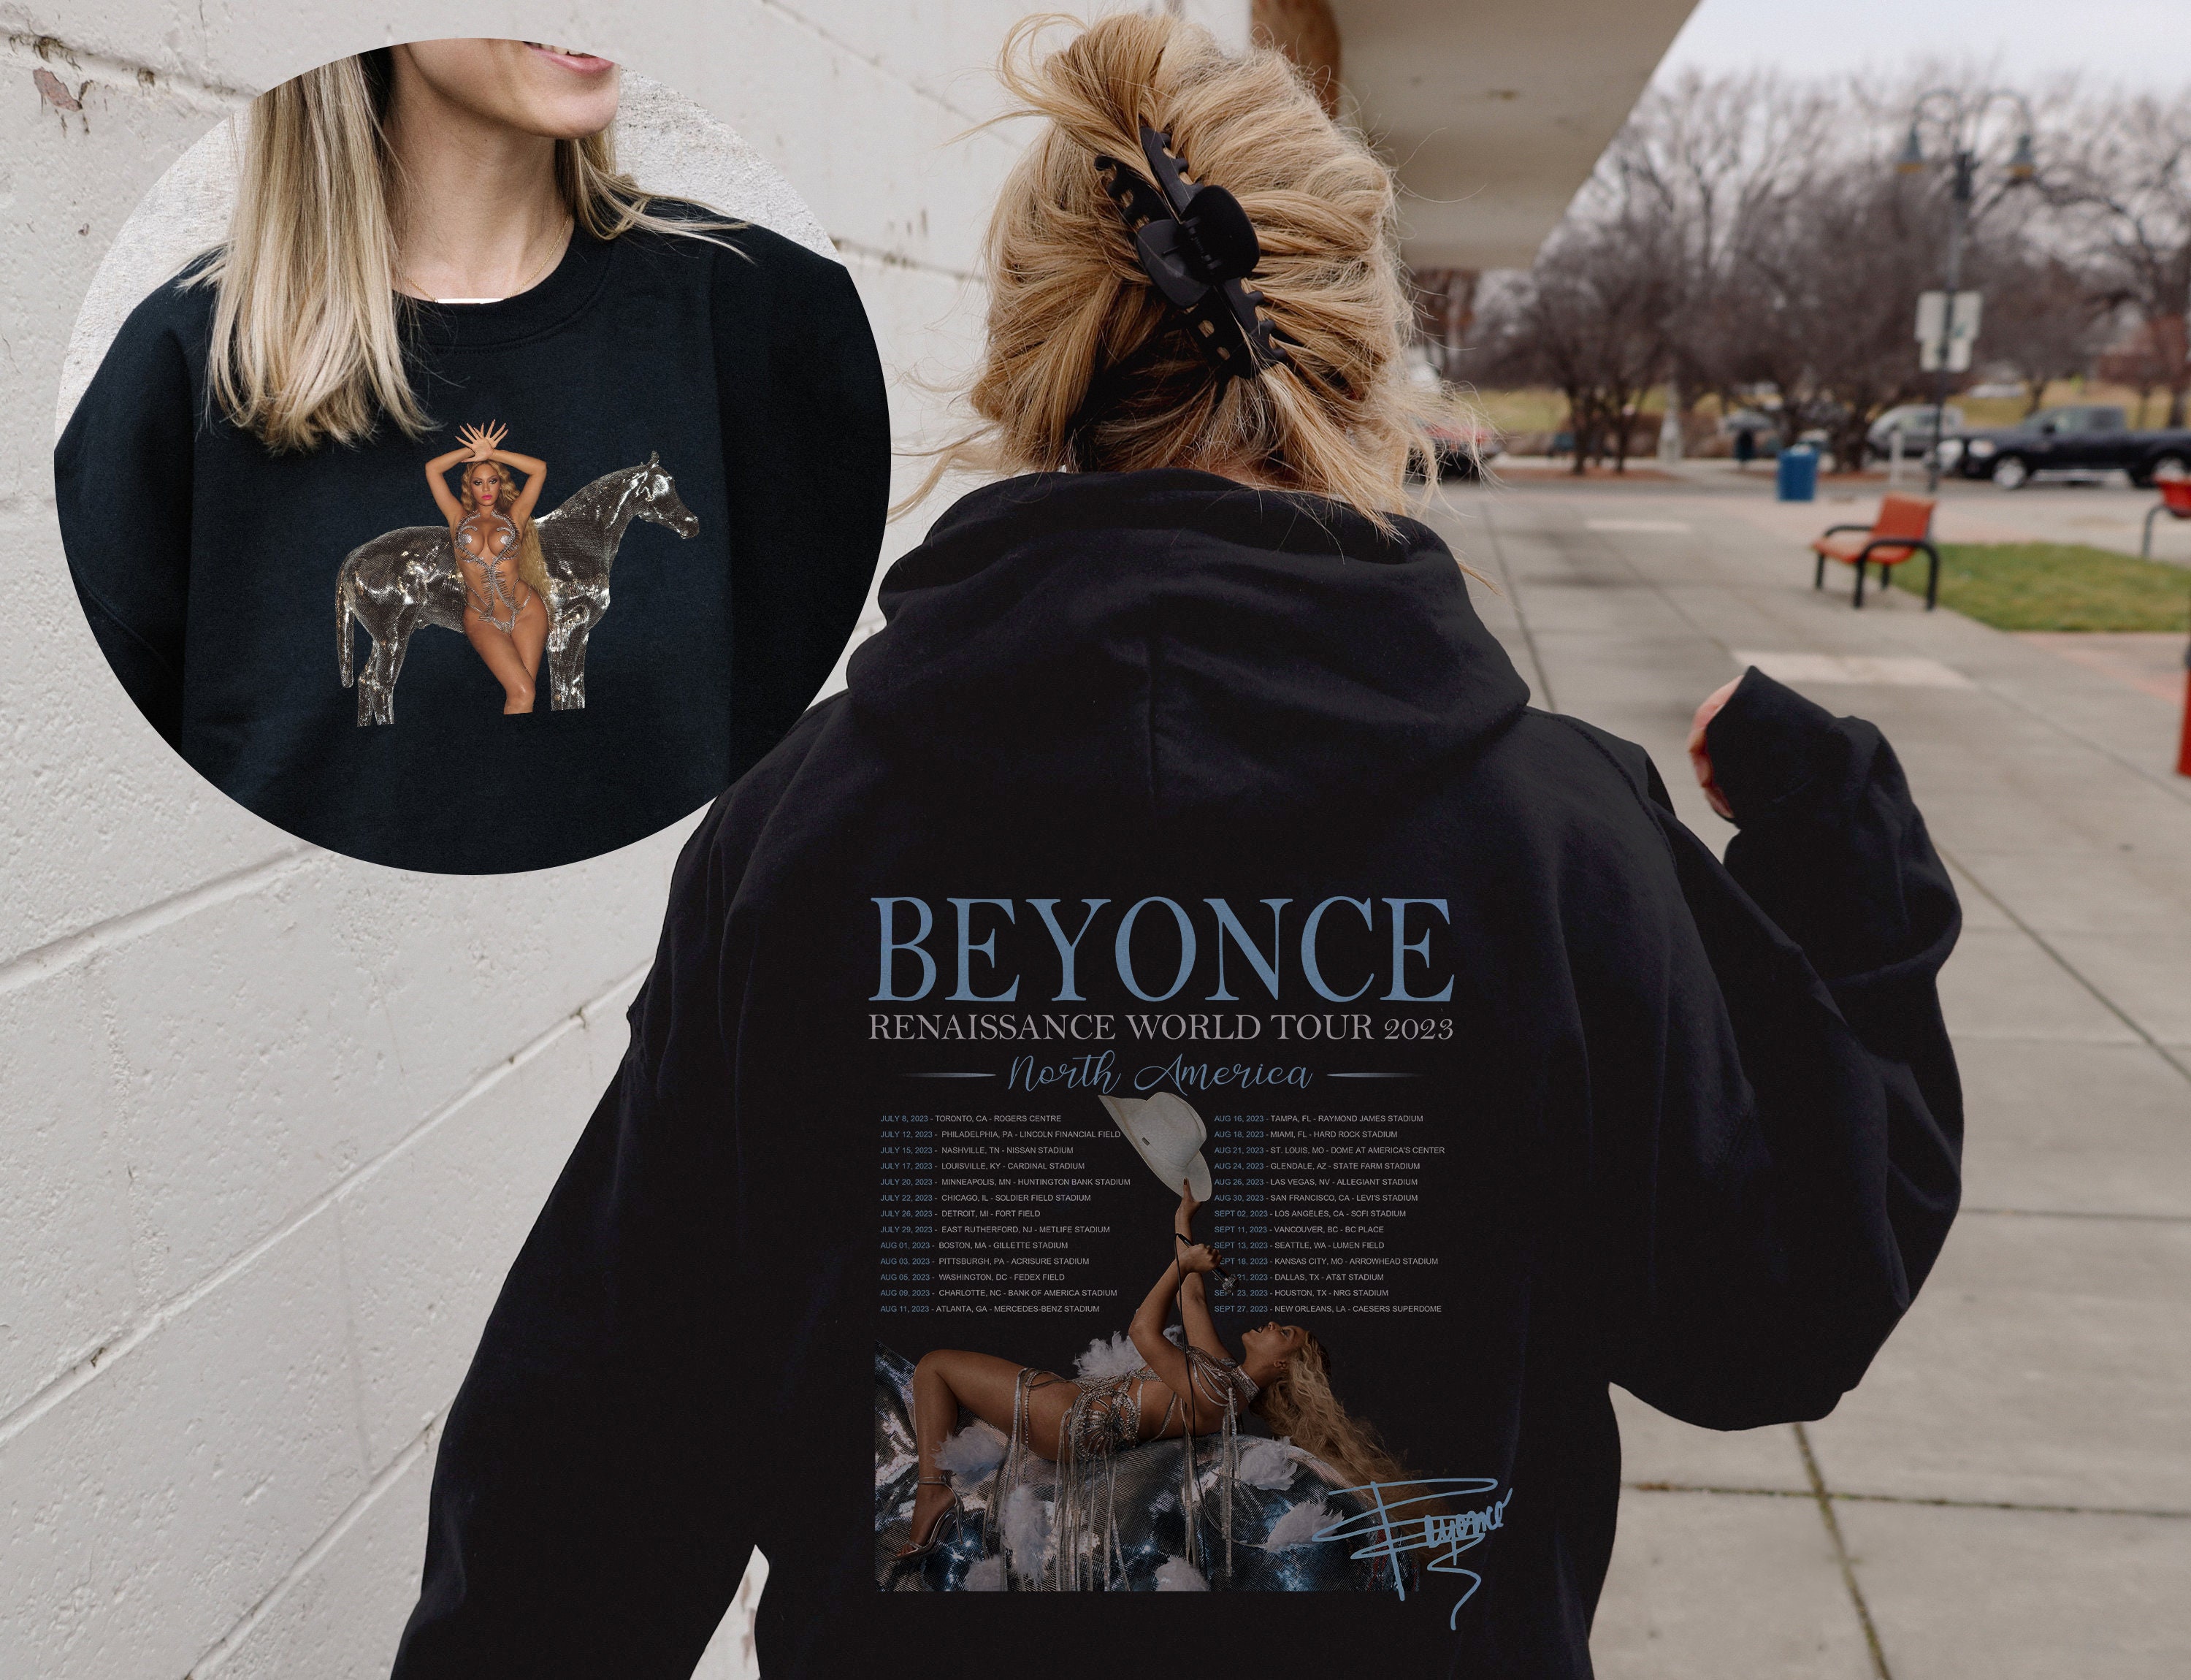 Discover Beyonce Renaissance World Tour 2023 Zweiseitiges Hoodies